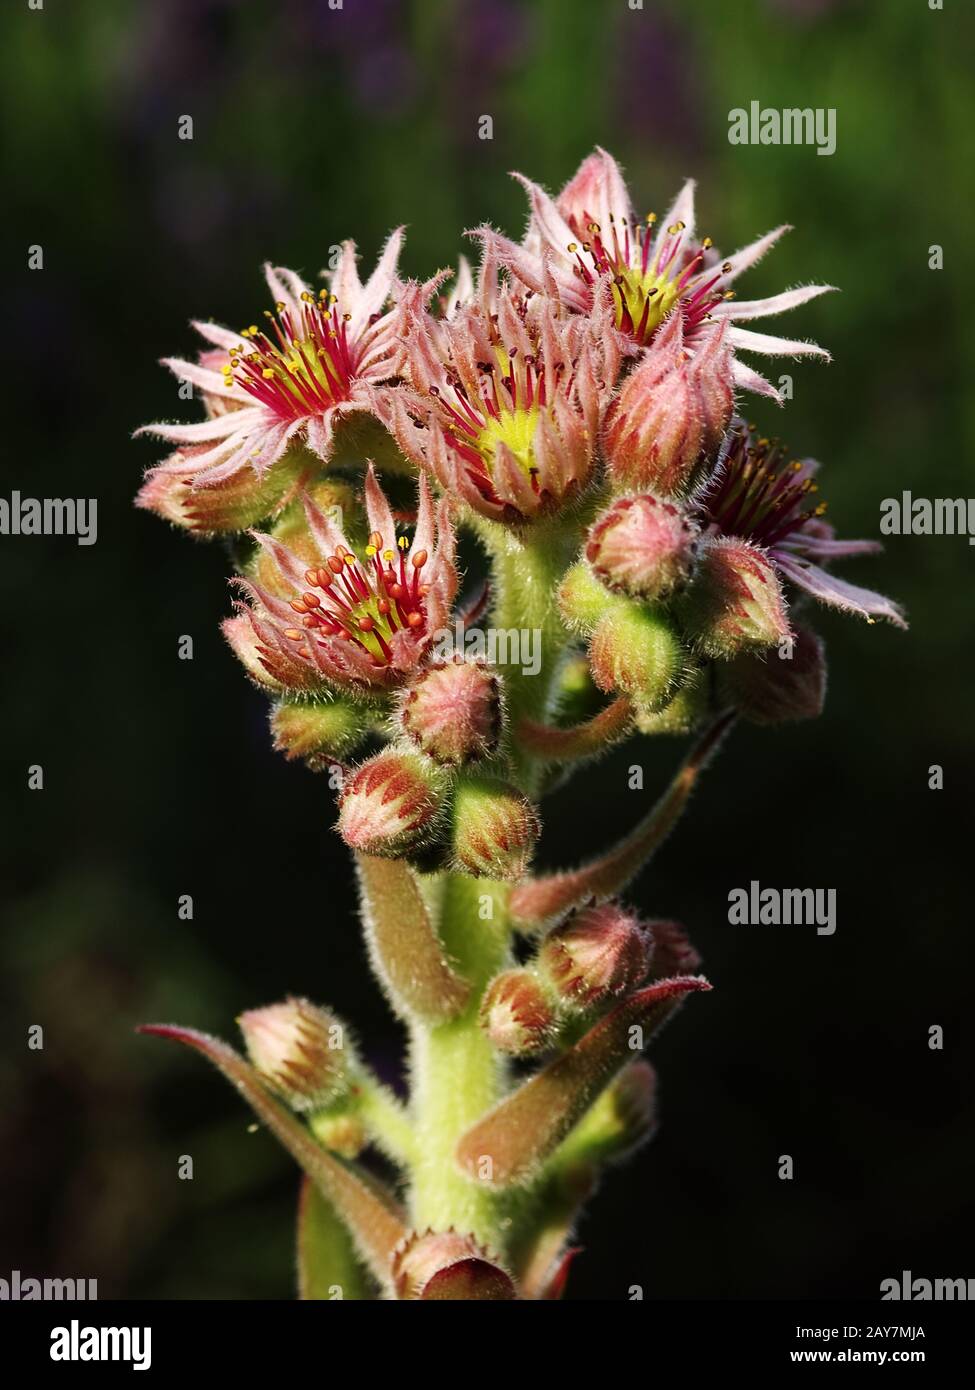 Flowering shoot of a houseleek Stock Photo